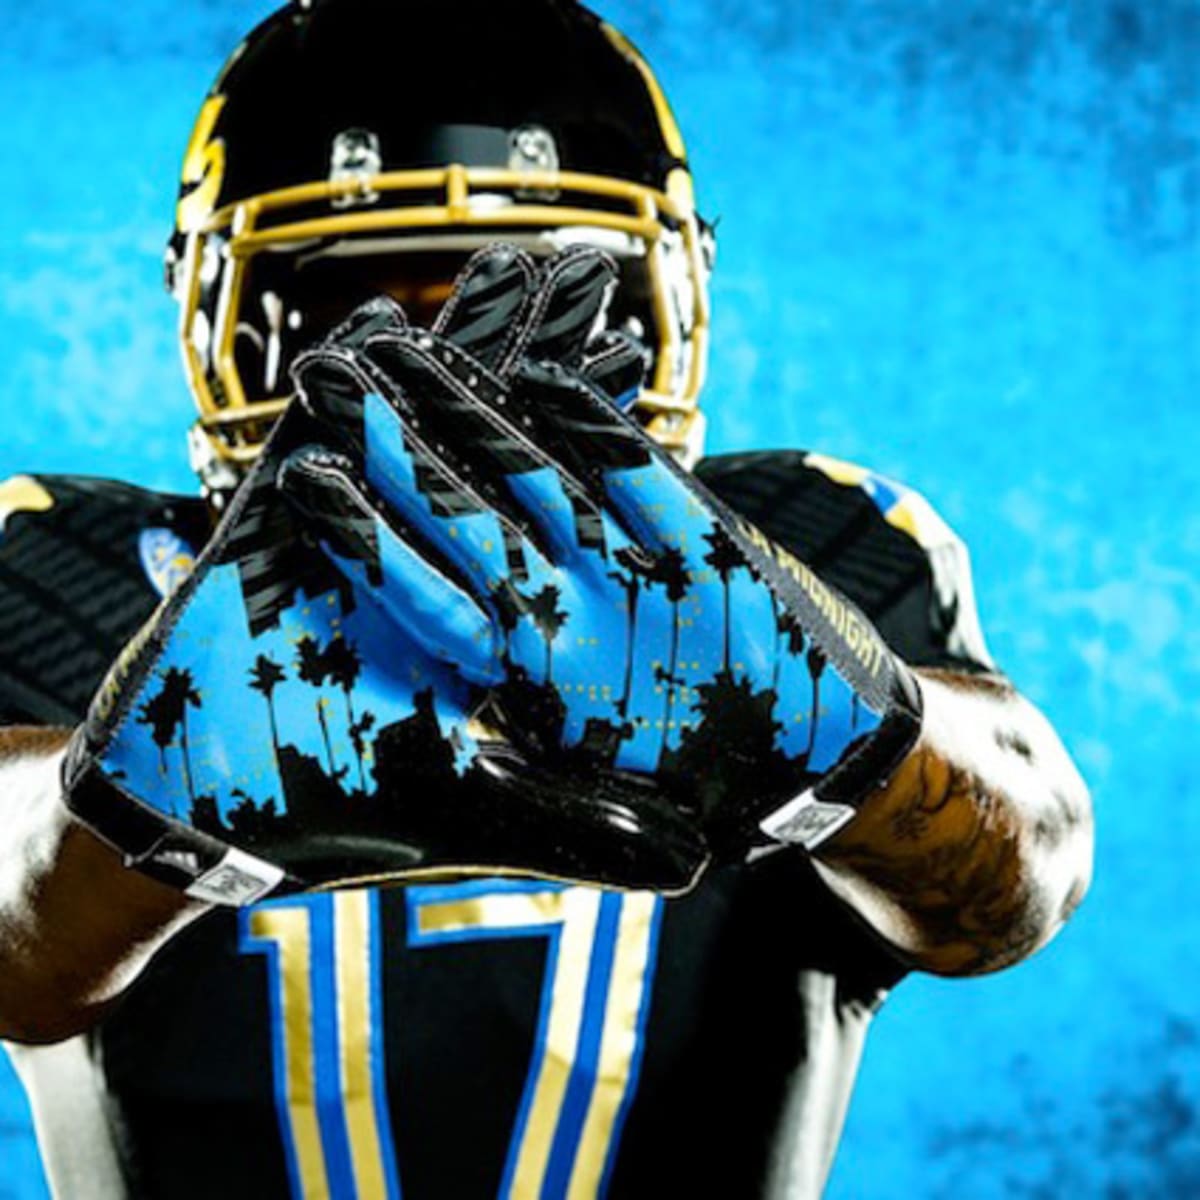 UCLA, adidas Unveil New Alternate Football Uniform